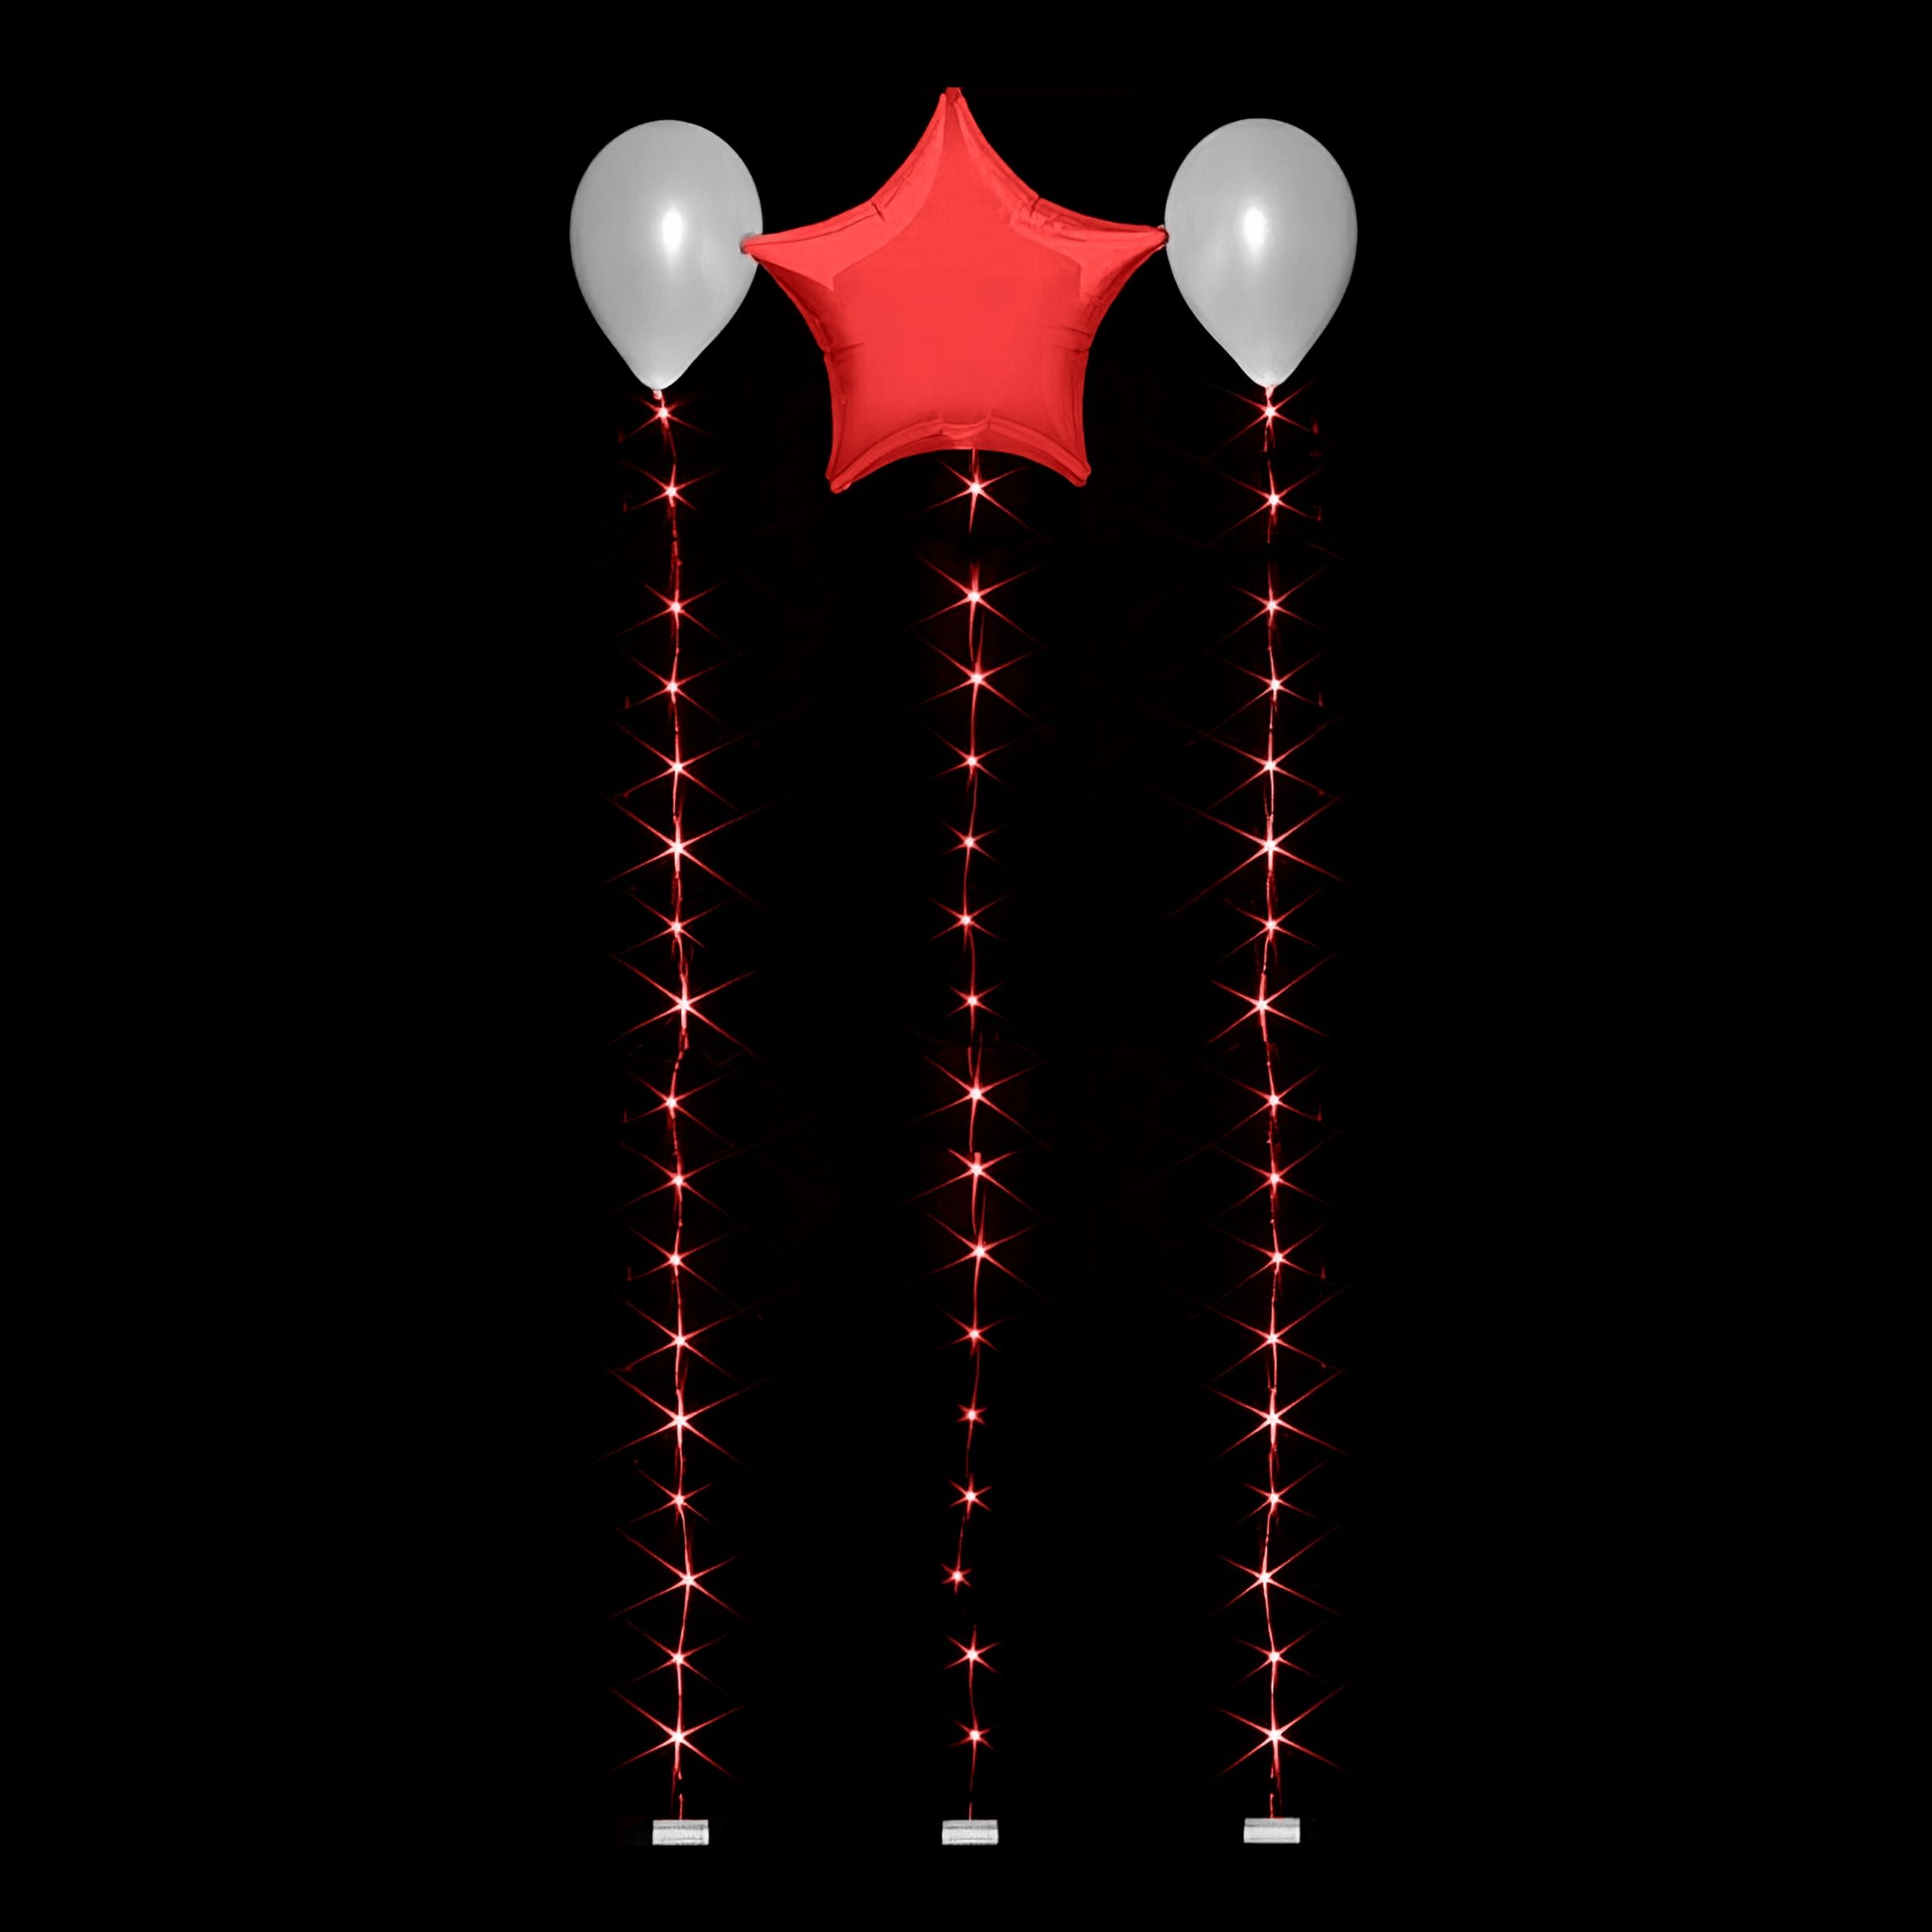 LED-slinga för Ballonger - Röd 1.8 m